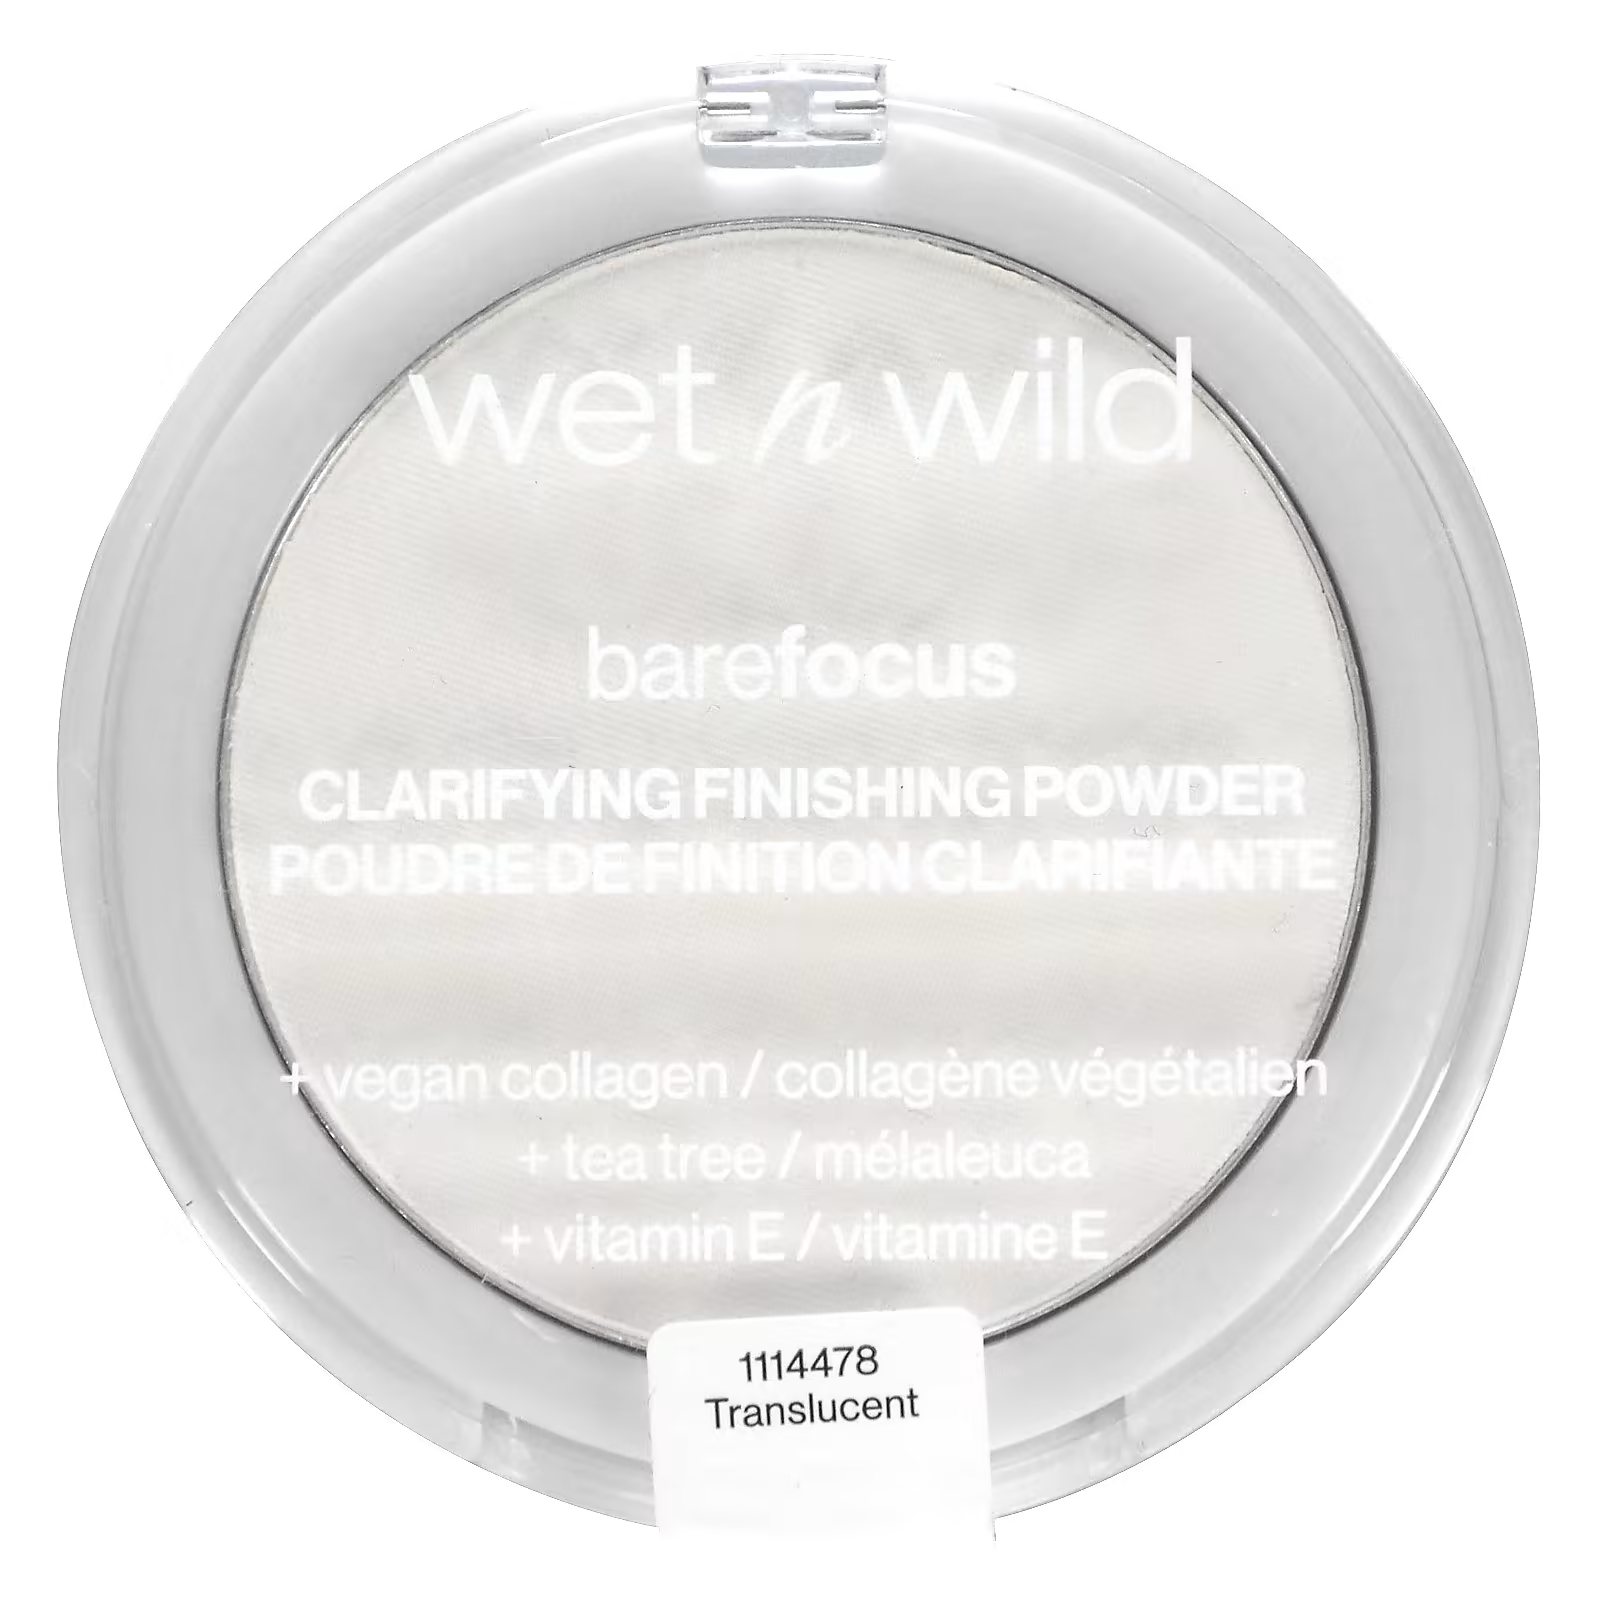 Пудра для лица Wet n Wild Barefocus Clarifying Finishing Powder Translucent цена и фото